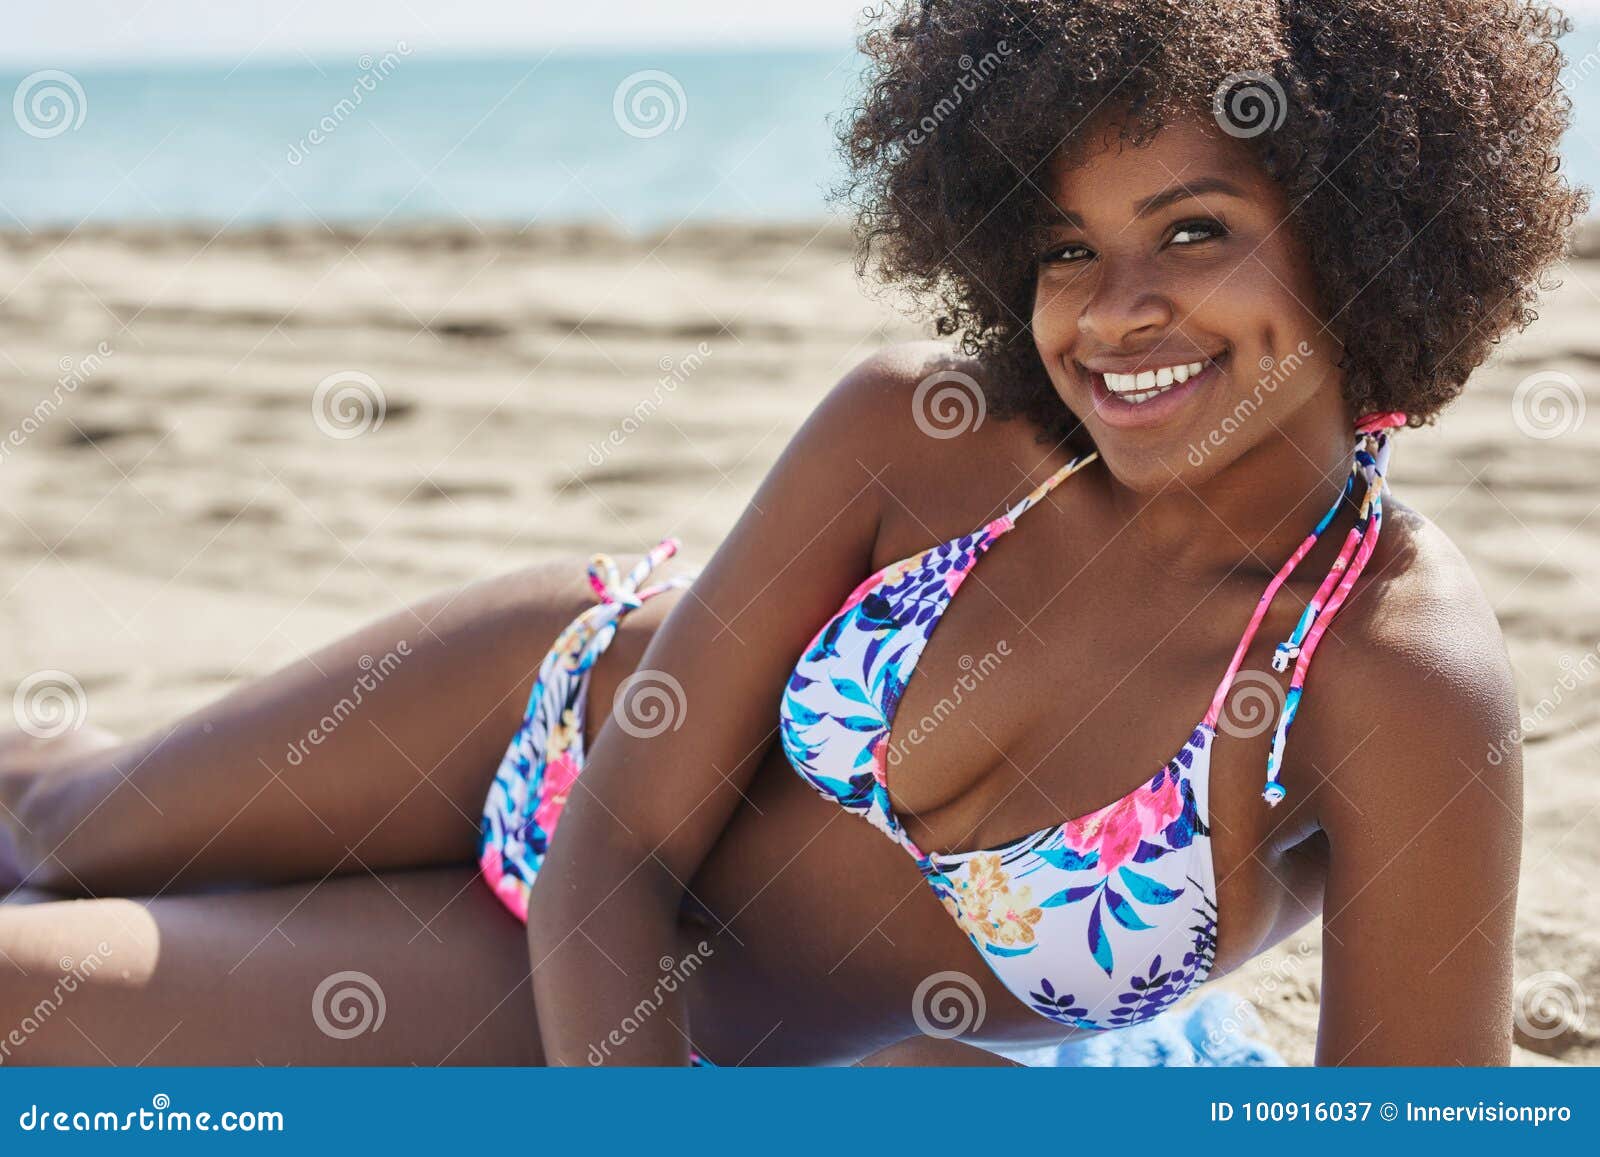 Beach Bikini Candid Pic Photo